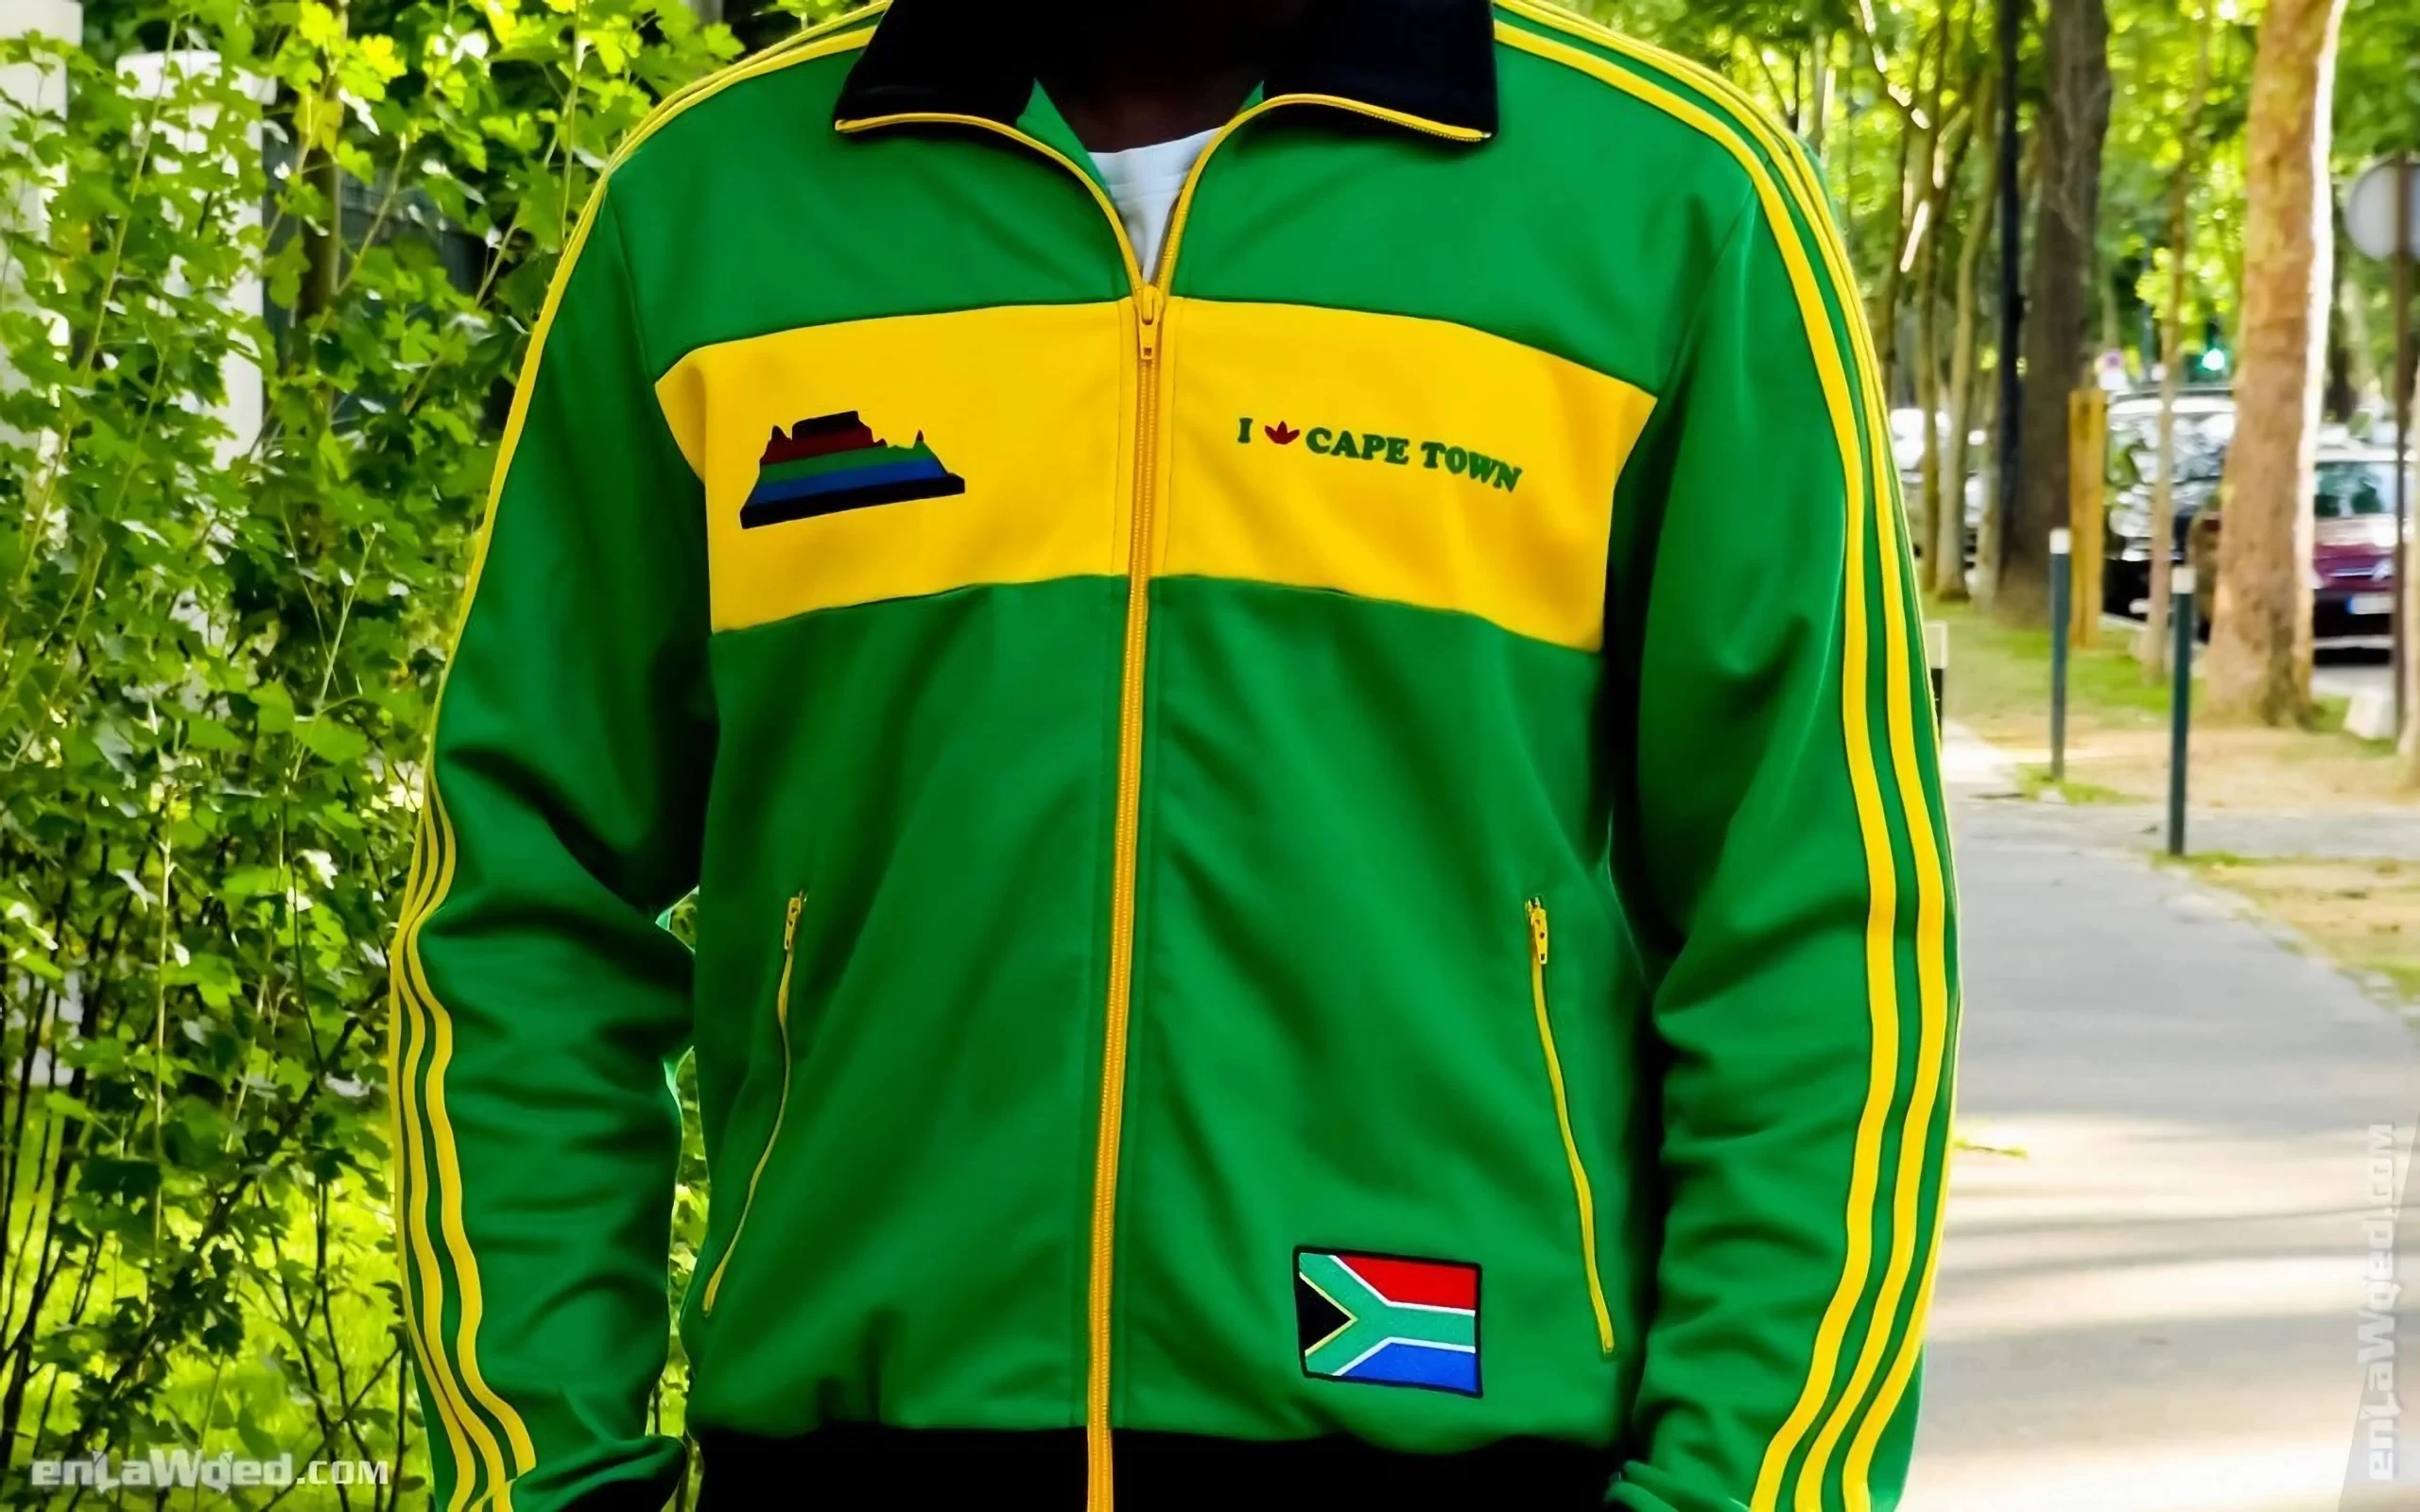 Men’s 2006 Cape Town TT by Adidas Originals: Passionate (EnLawded.com file #lmchk90451ip2y122295kg9st)